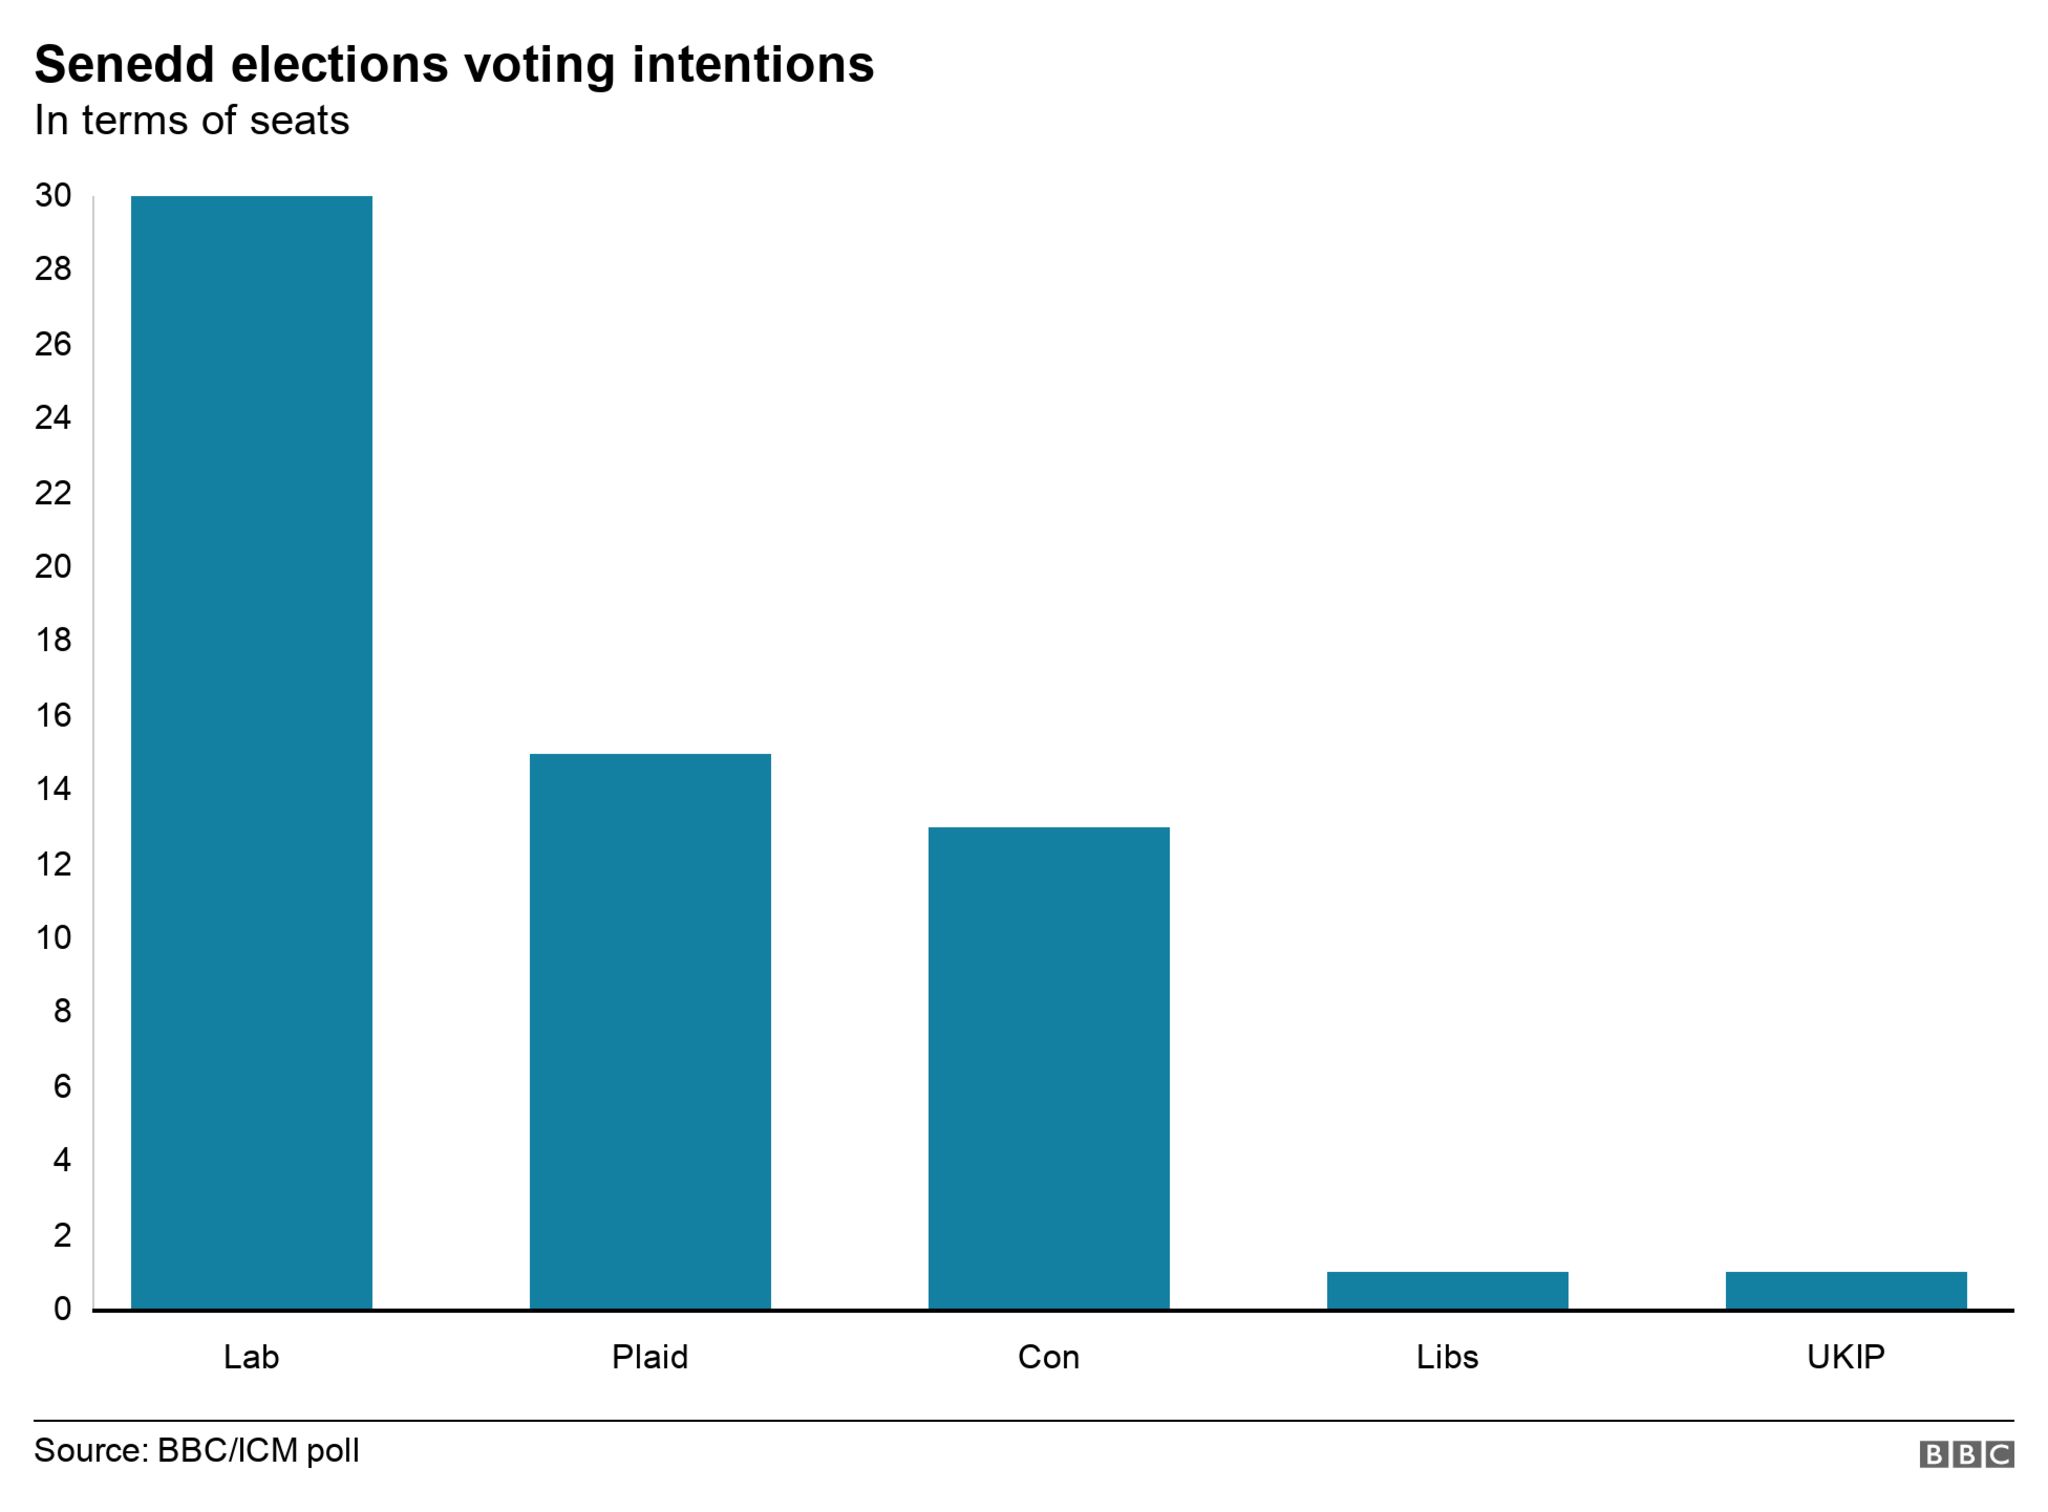 Graphic showing Senedd voting intentions